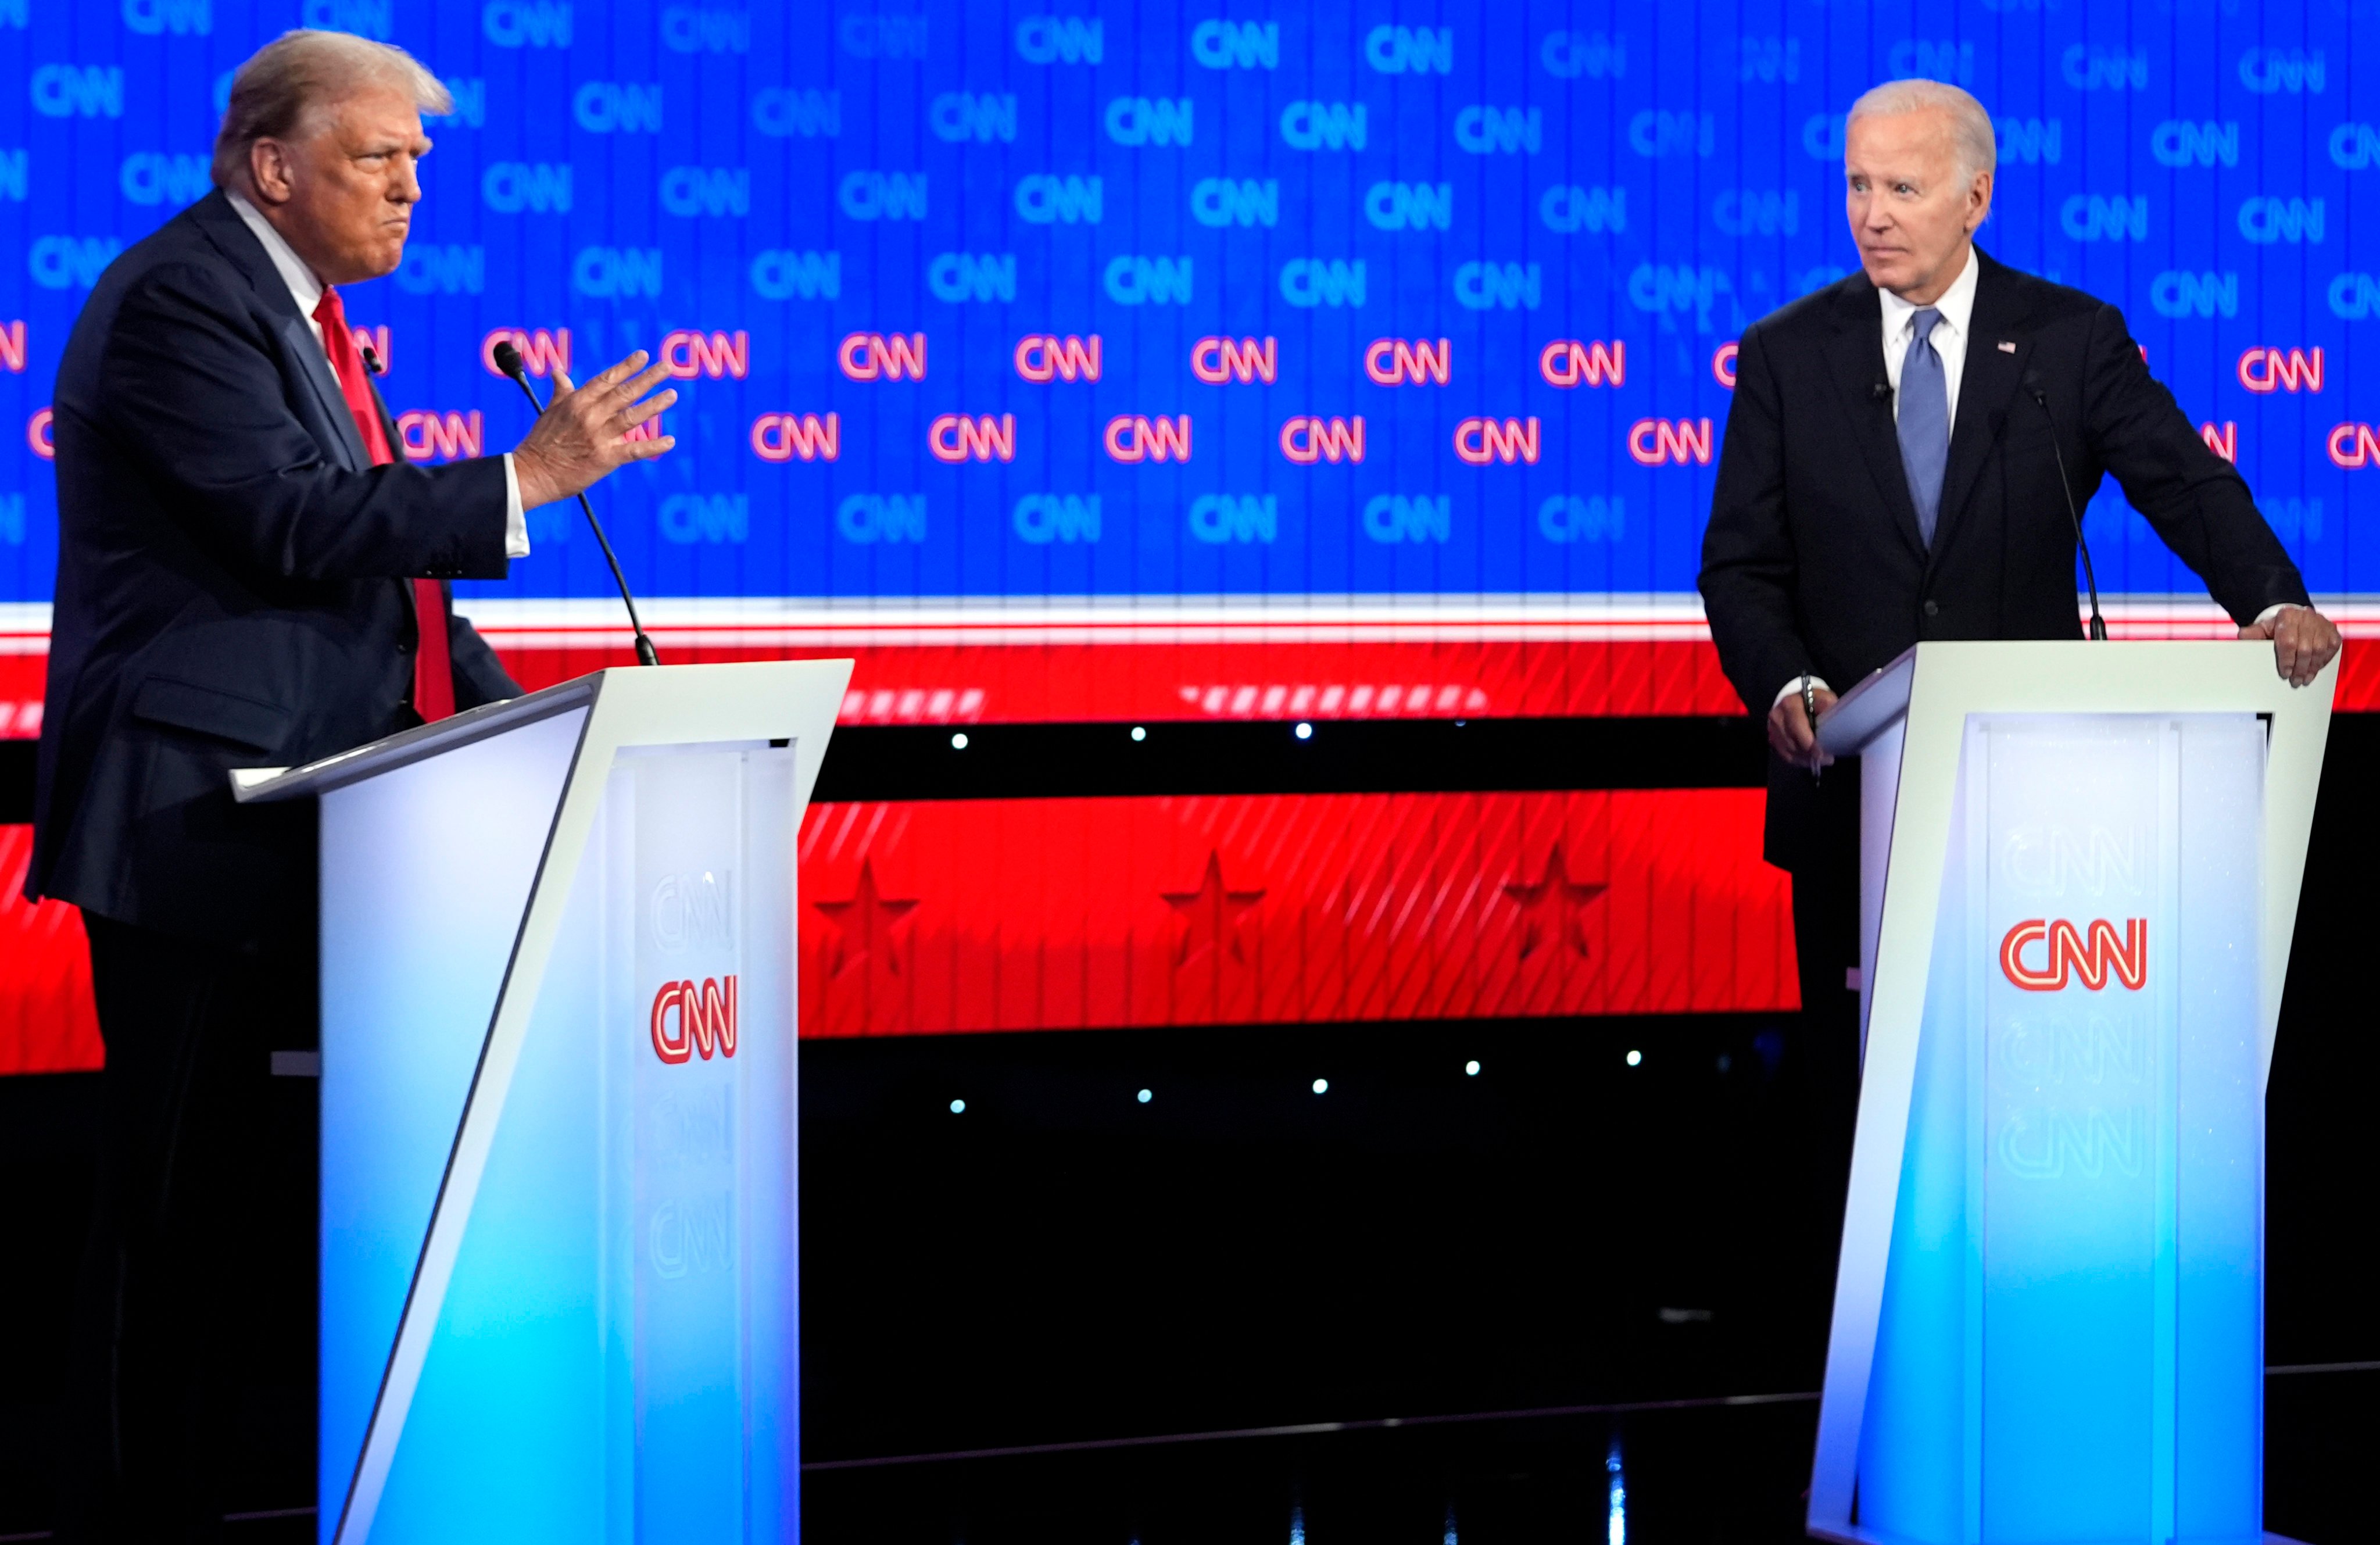 Joe Biden and Donald Trump faced off last week in their first televised debate. Photo: AP